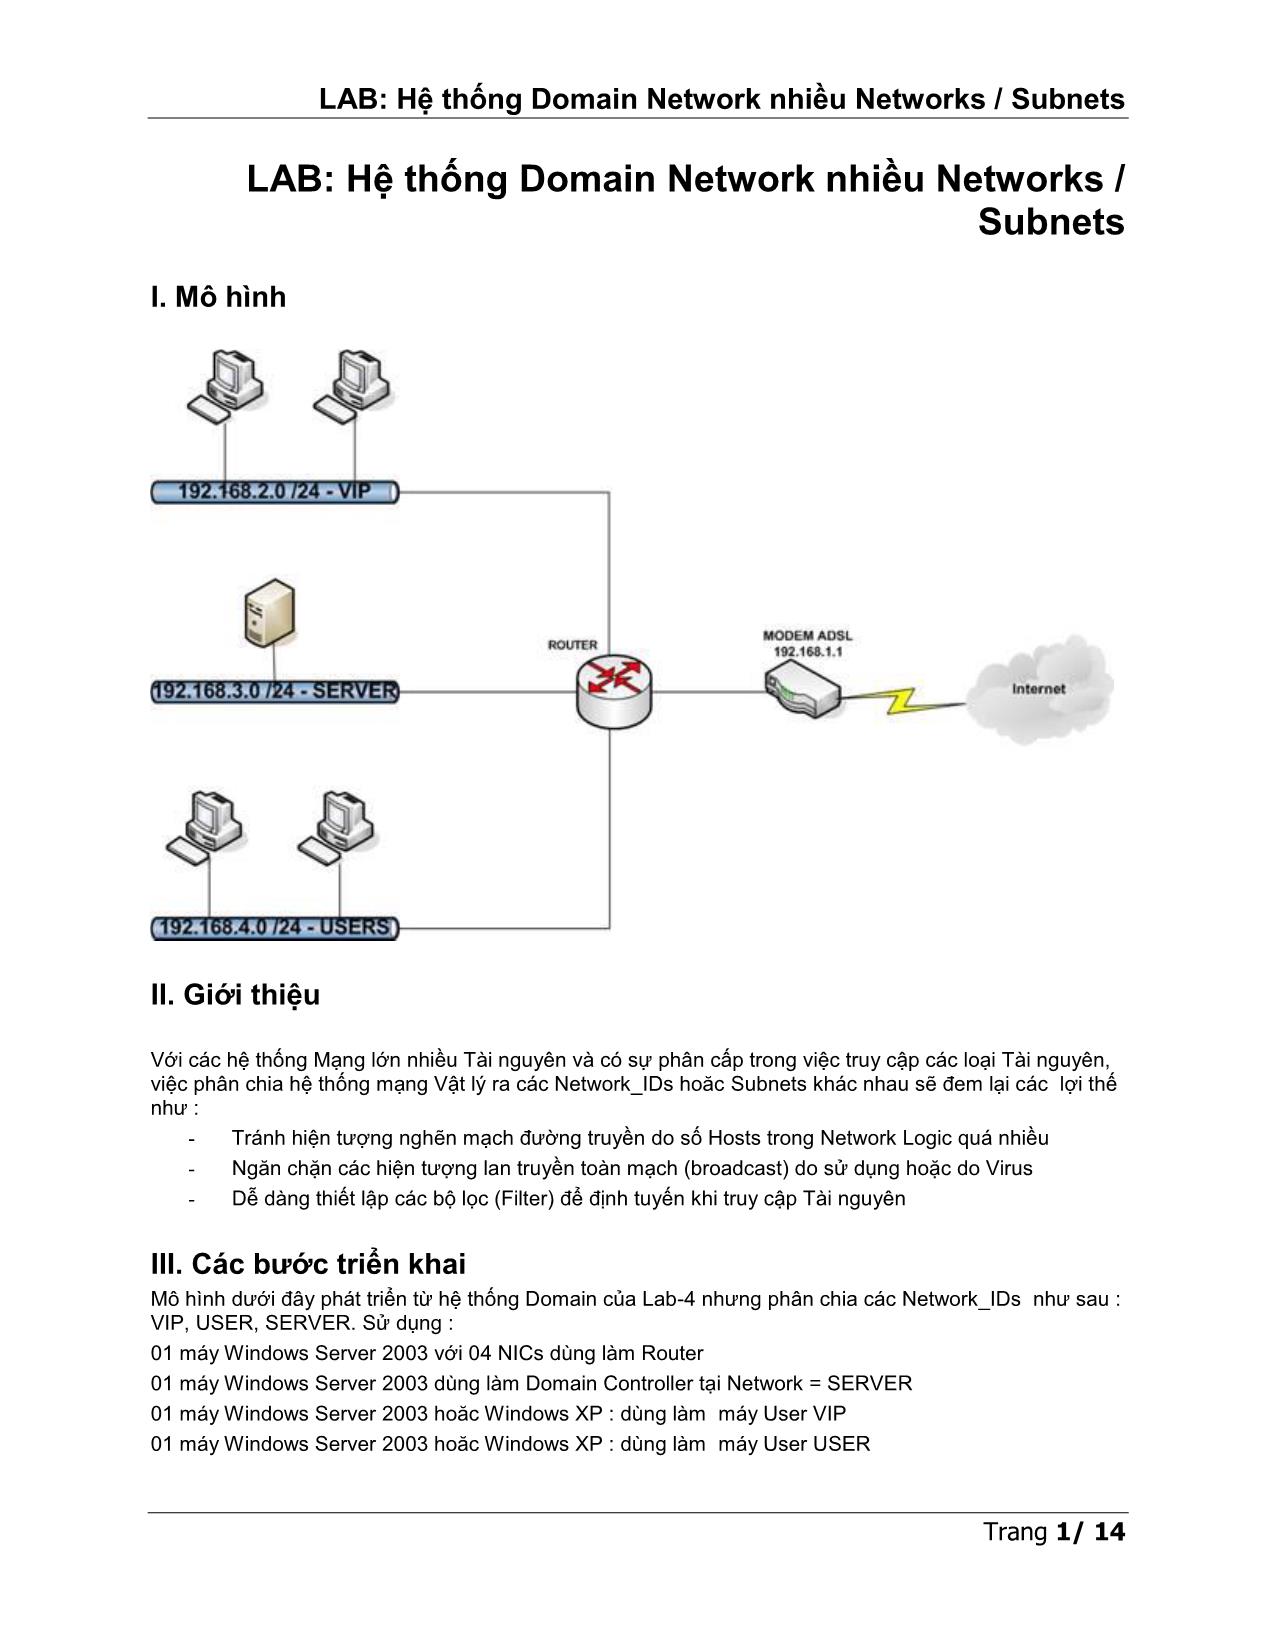 Hệ thống Domain Network nhiều Networks/Subnets trang 1